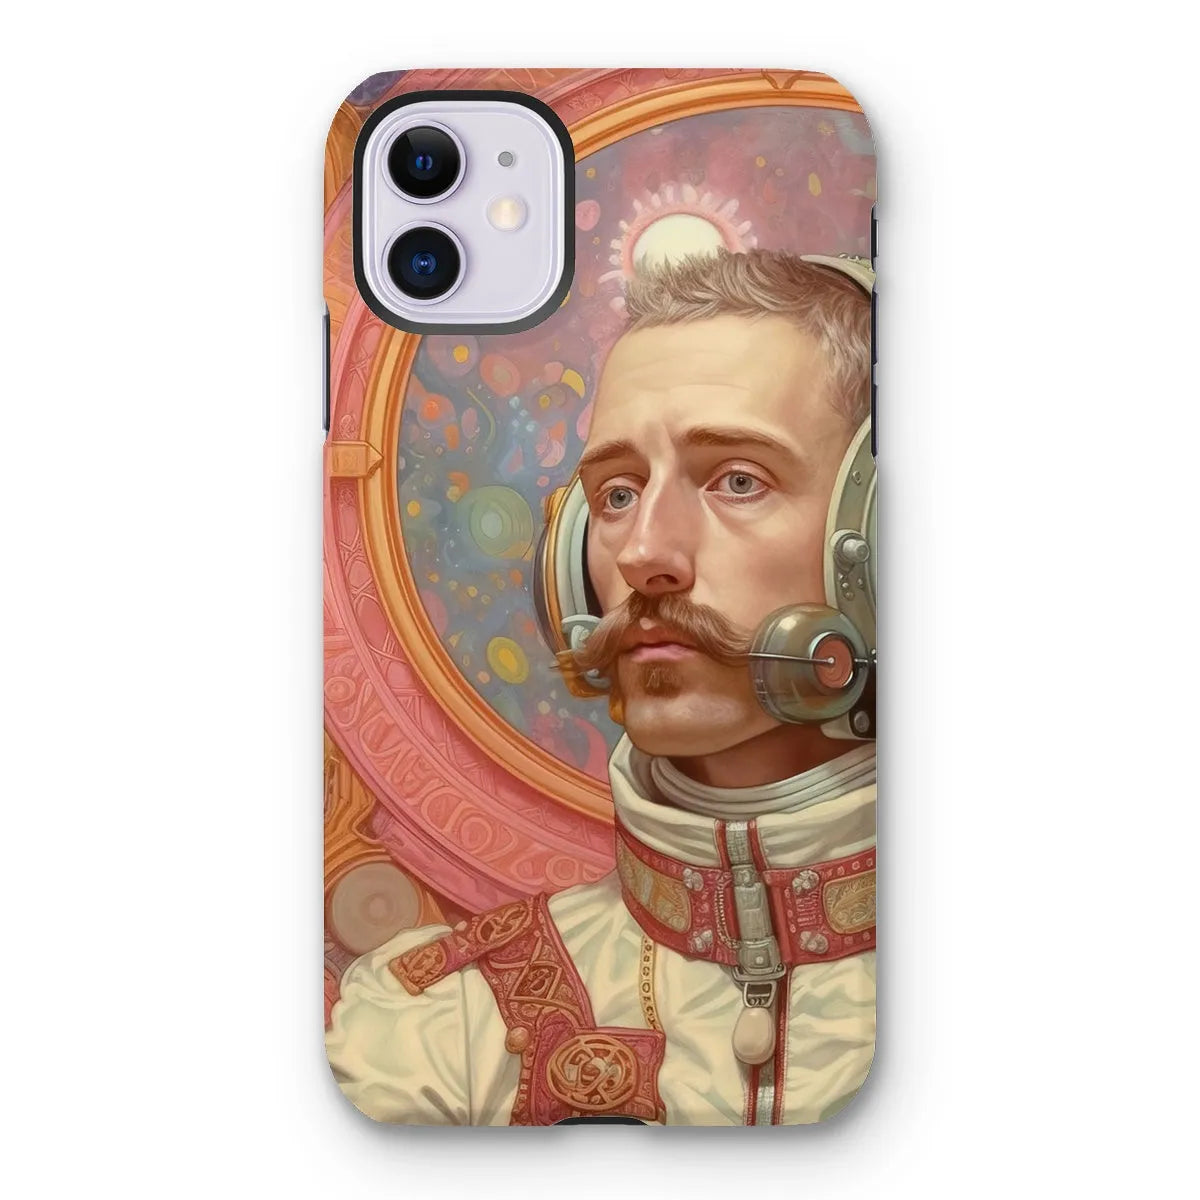 Axel The Gay Astronaut - Gay Aesthetic Art Phone Case - Iphone 11 / Matte - Mobile Phone Cases - Aesthetic Art